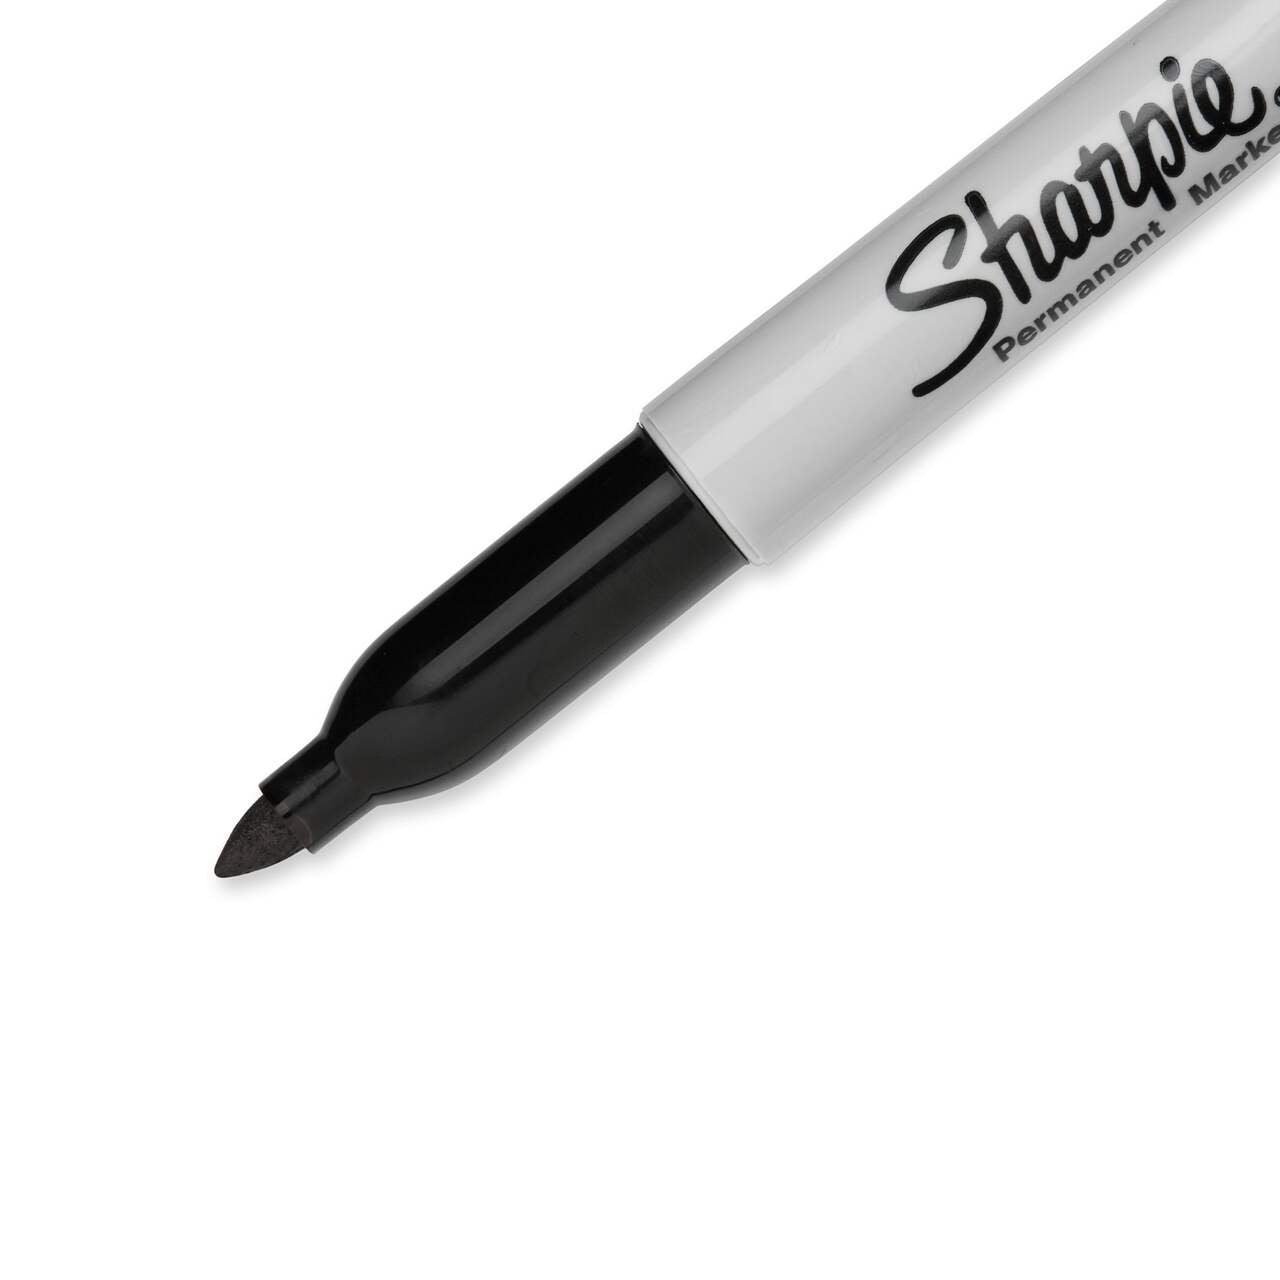 Sharpie Permanent Markers, Fine Point Black 5 Pack || مجموعة اقلام شاربي لون اسود عدد ٥ حبة